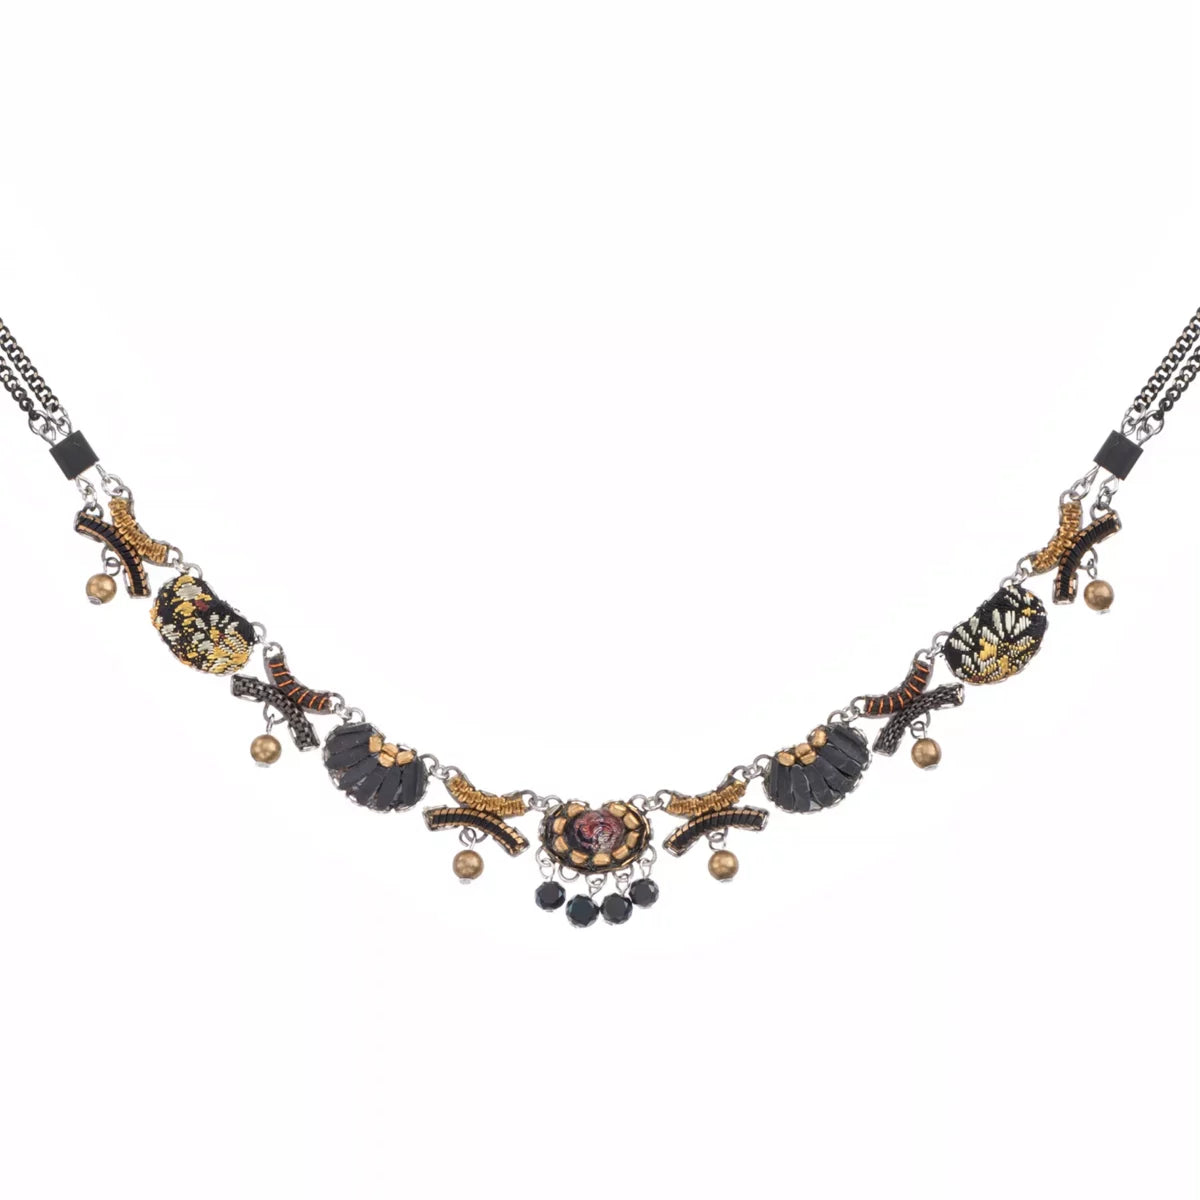 Royalty Zuri Necklace - The Nancy Smillie Shop - Art, Jewellery & Designer Gifts Glasgow